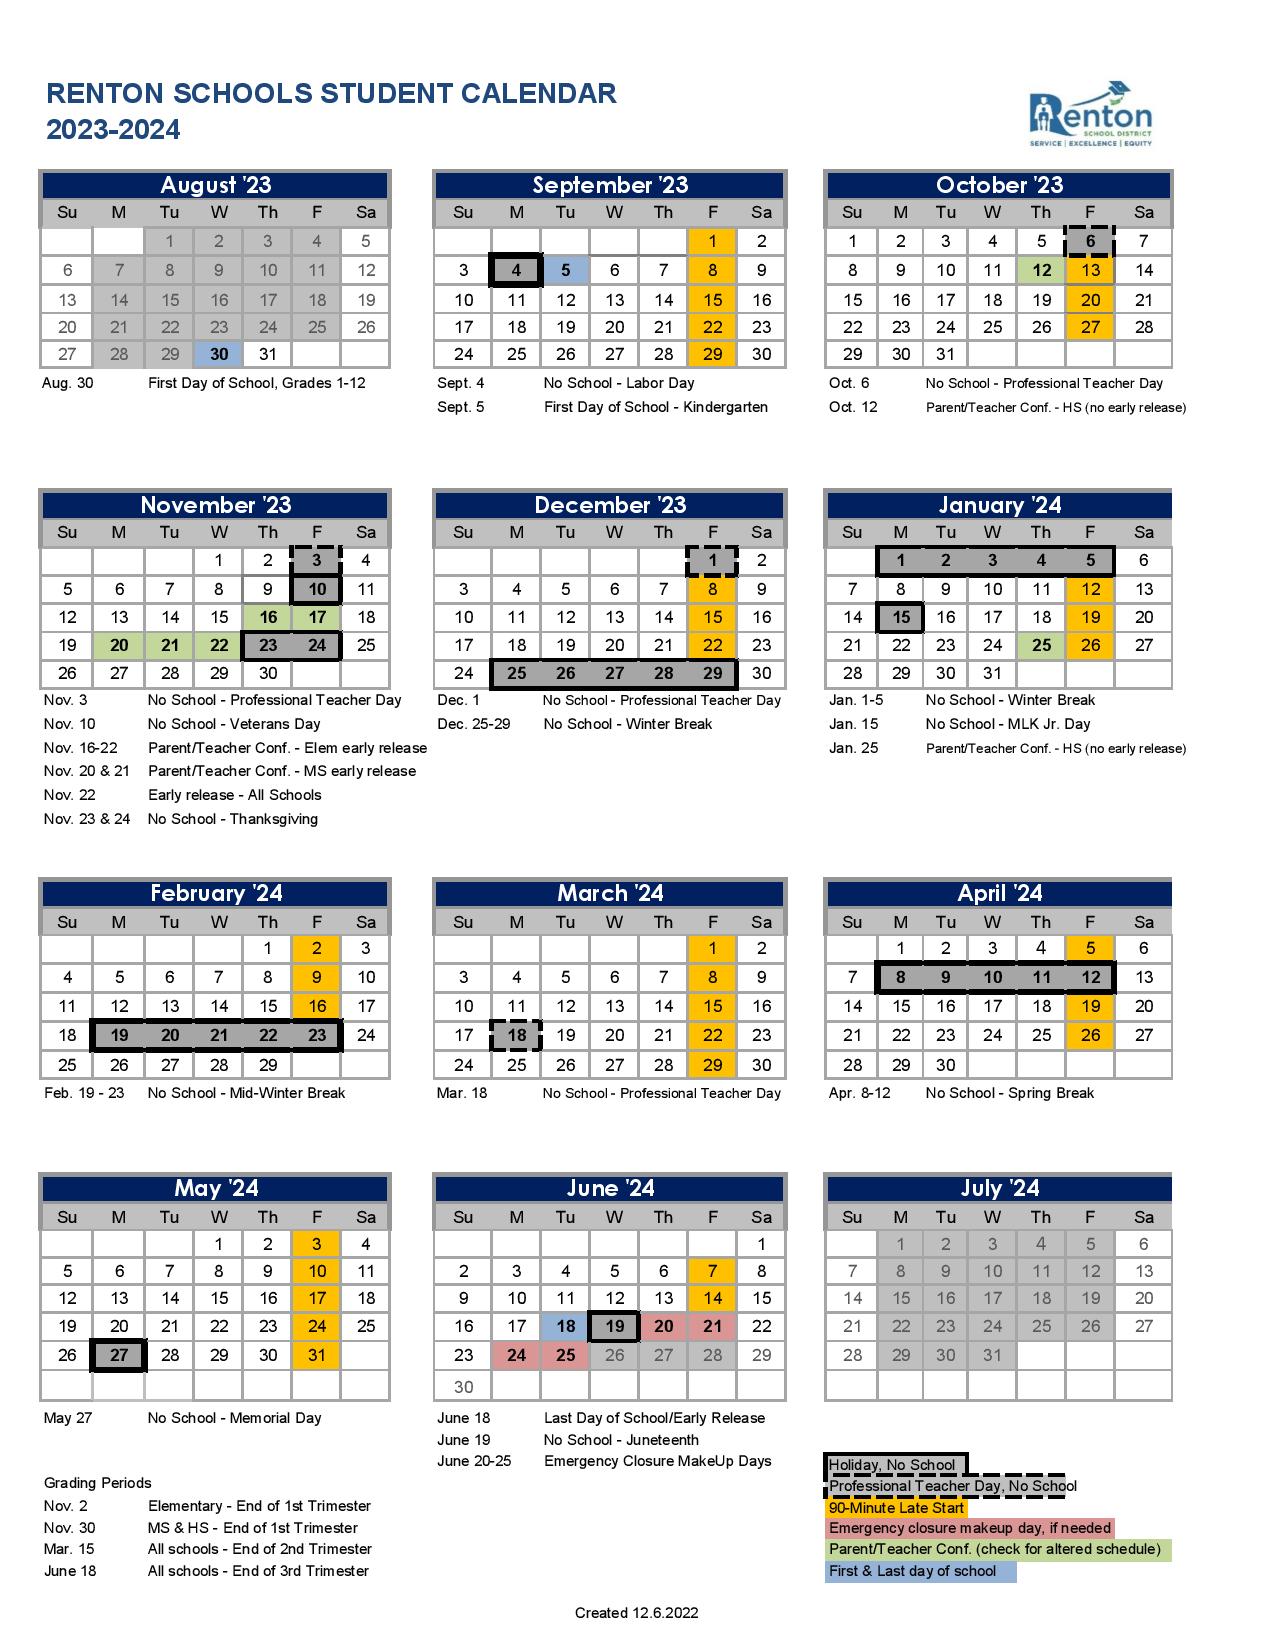 Renton School District Calendar 20232024 (Holiday Breaks)